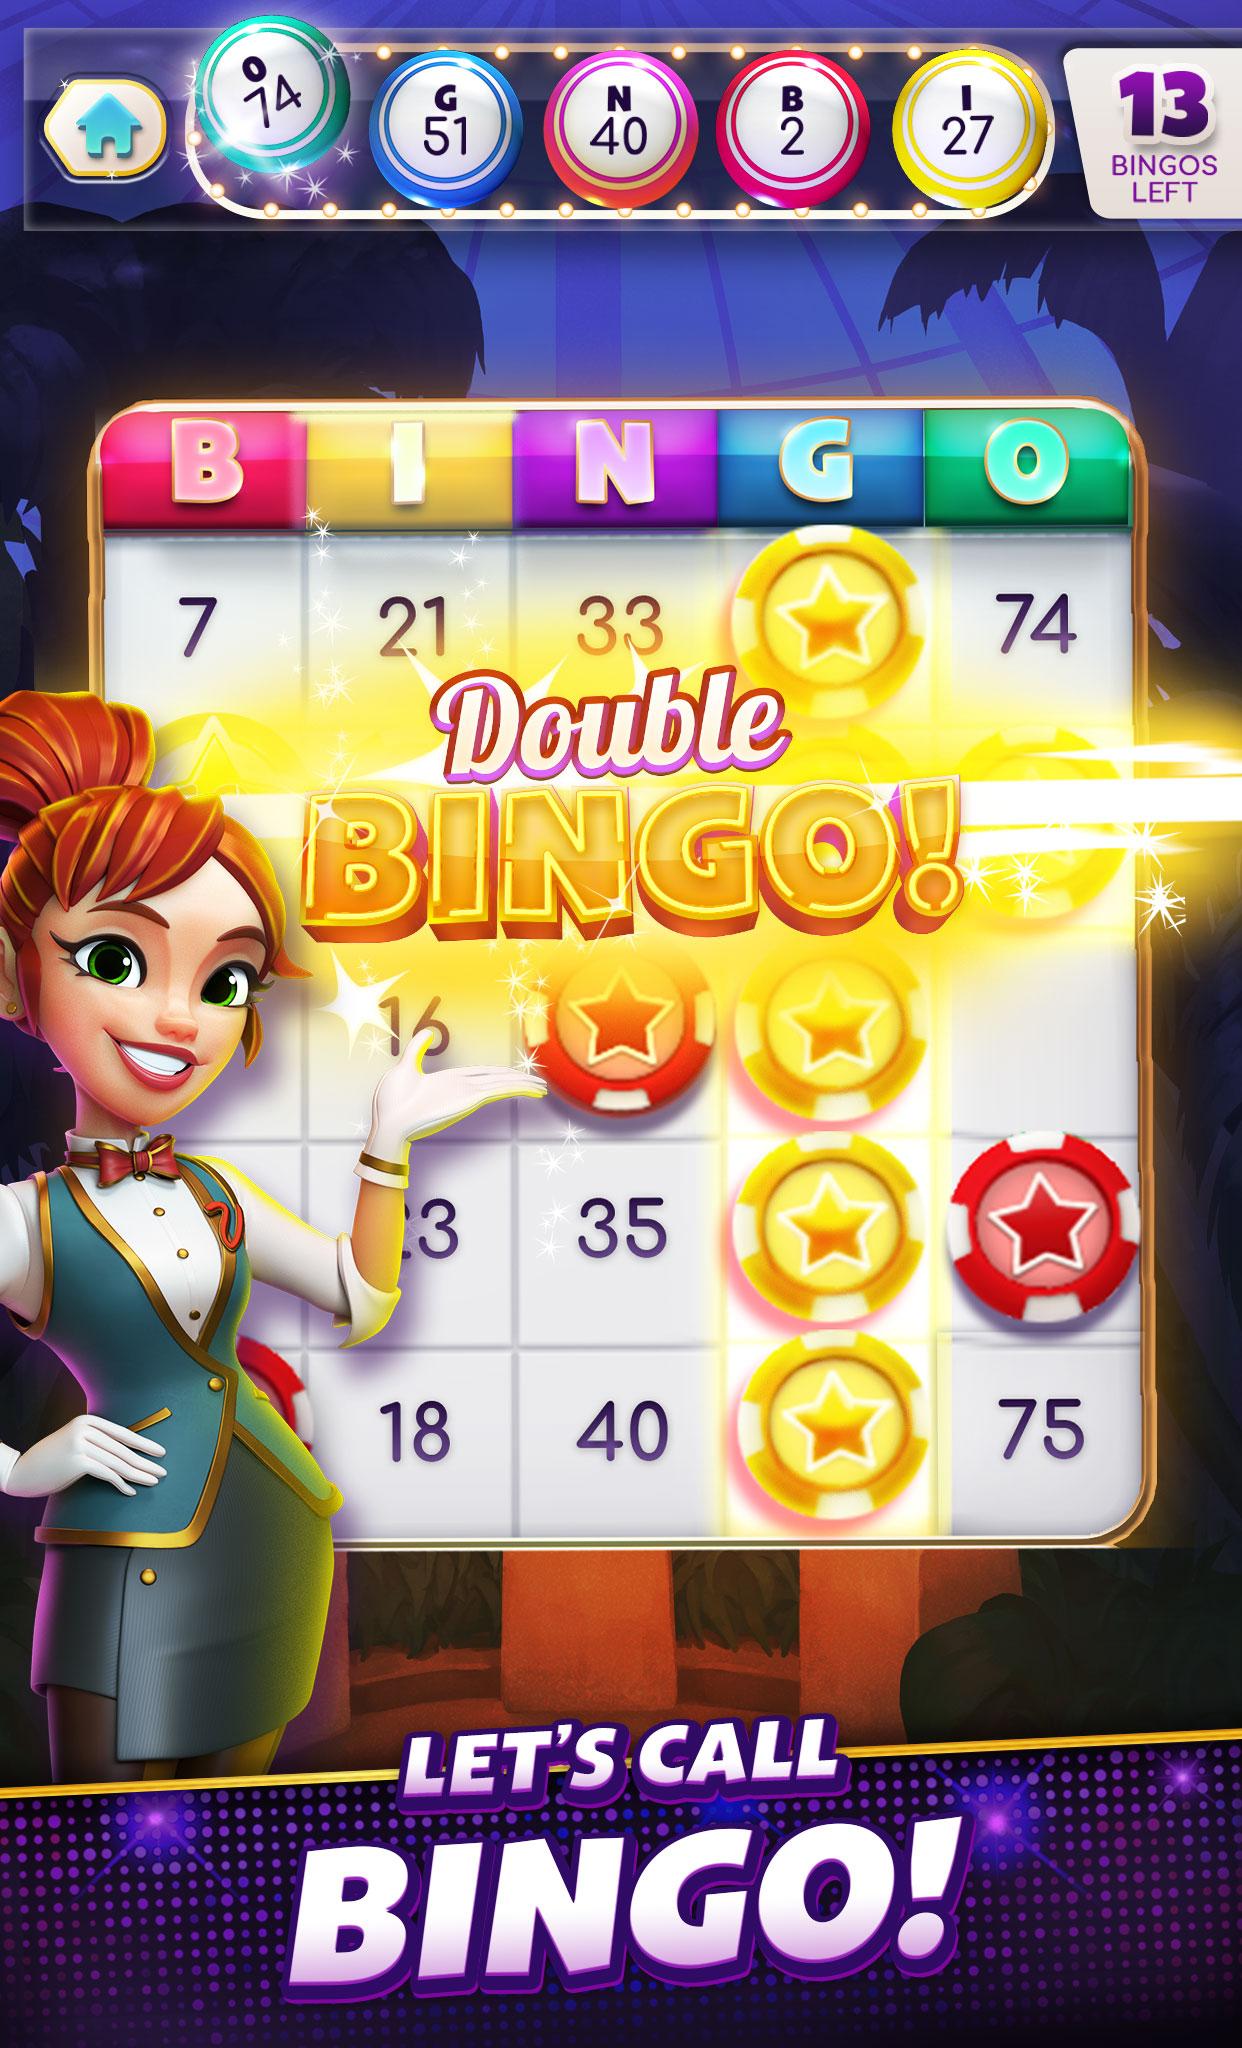 myVEGAS BINGO - Social Casino & Fun Bingo Games! 0.1.1499 Screenshot 13